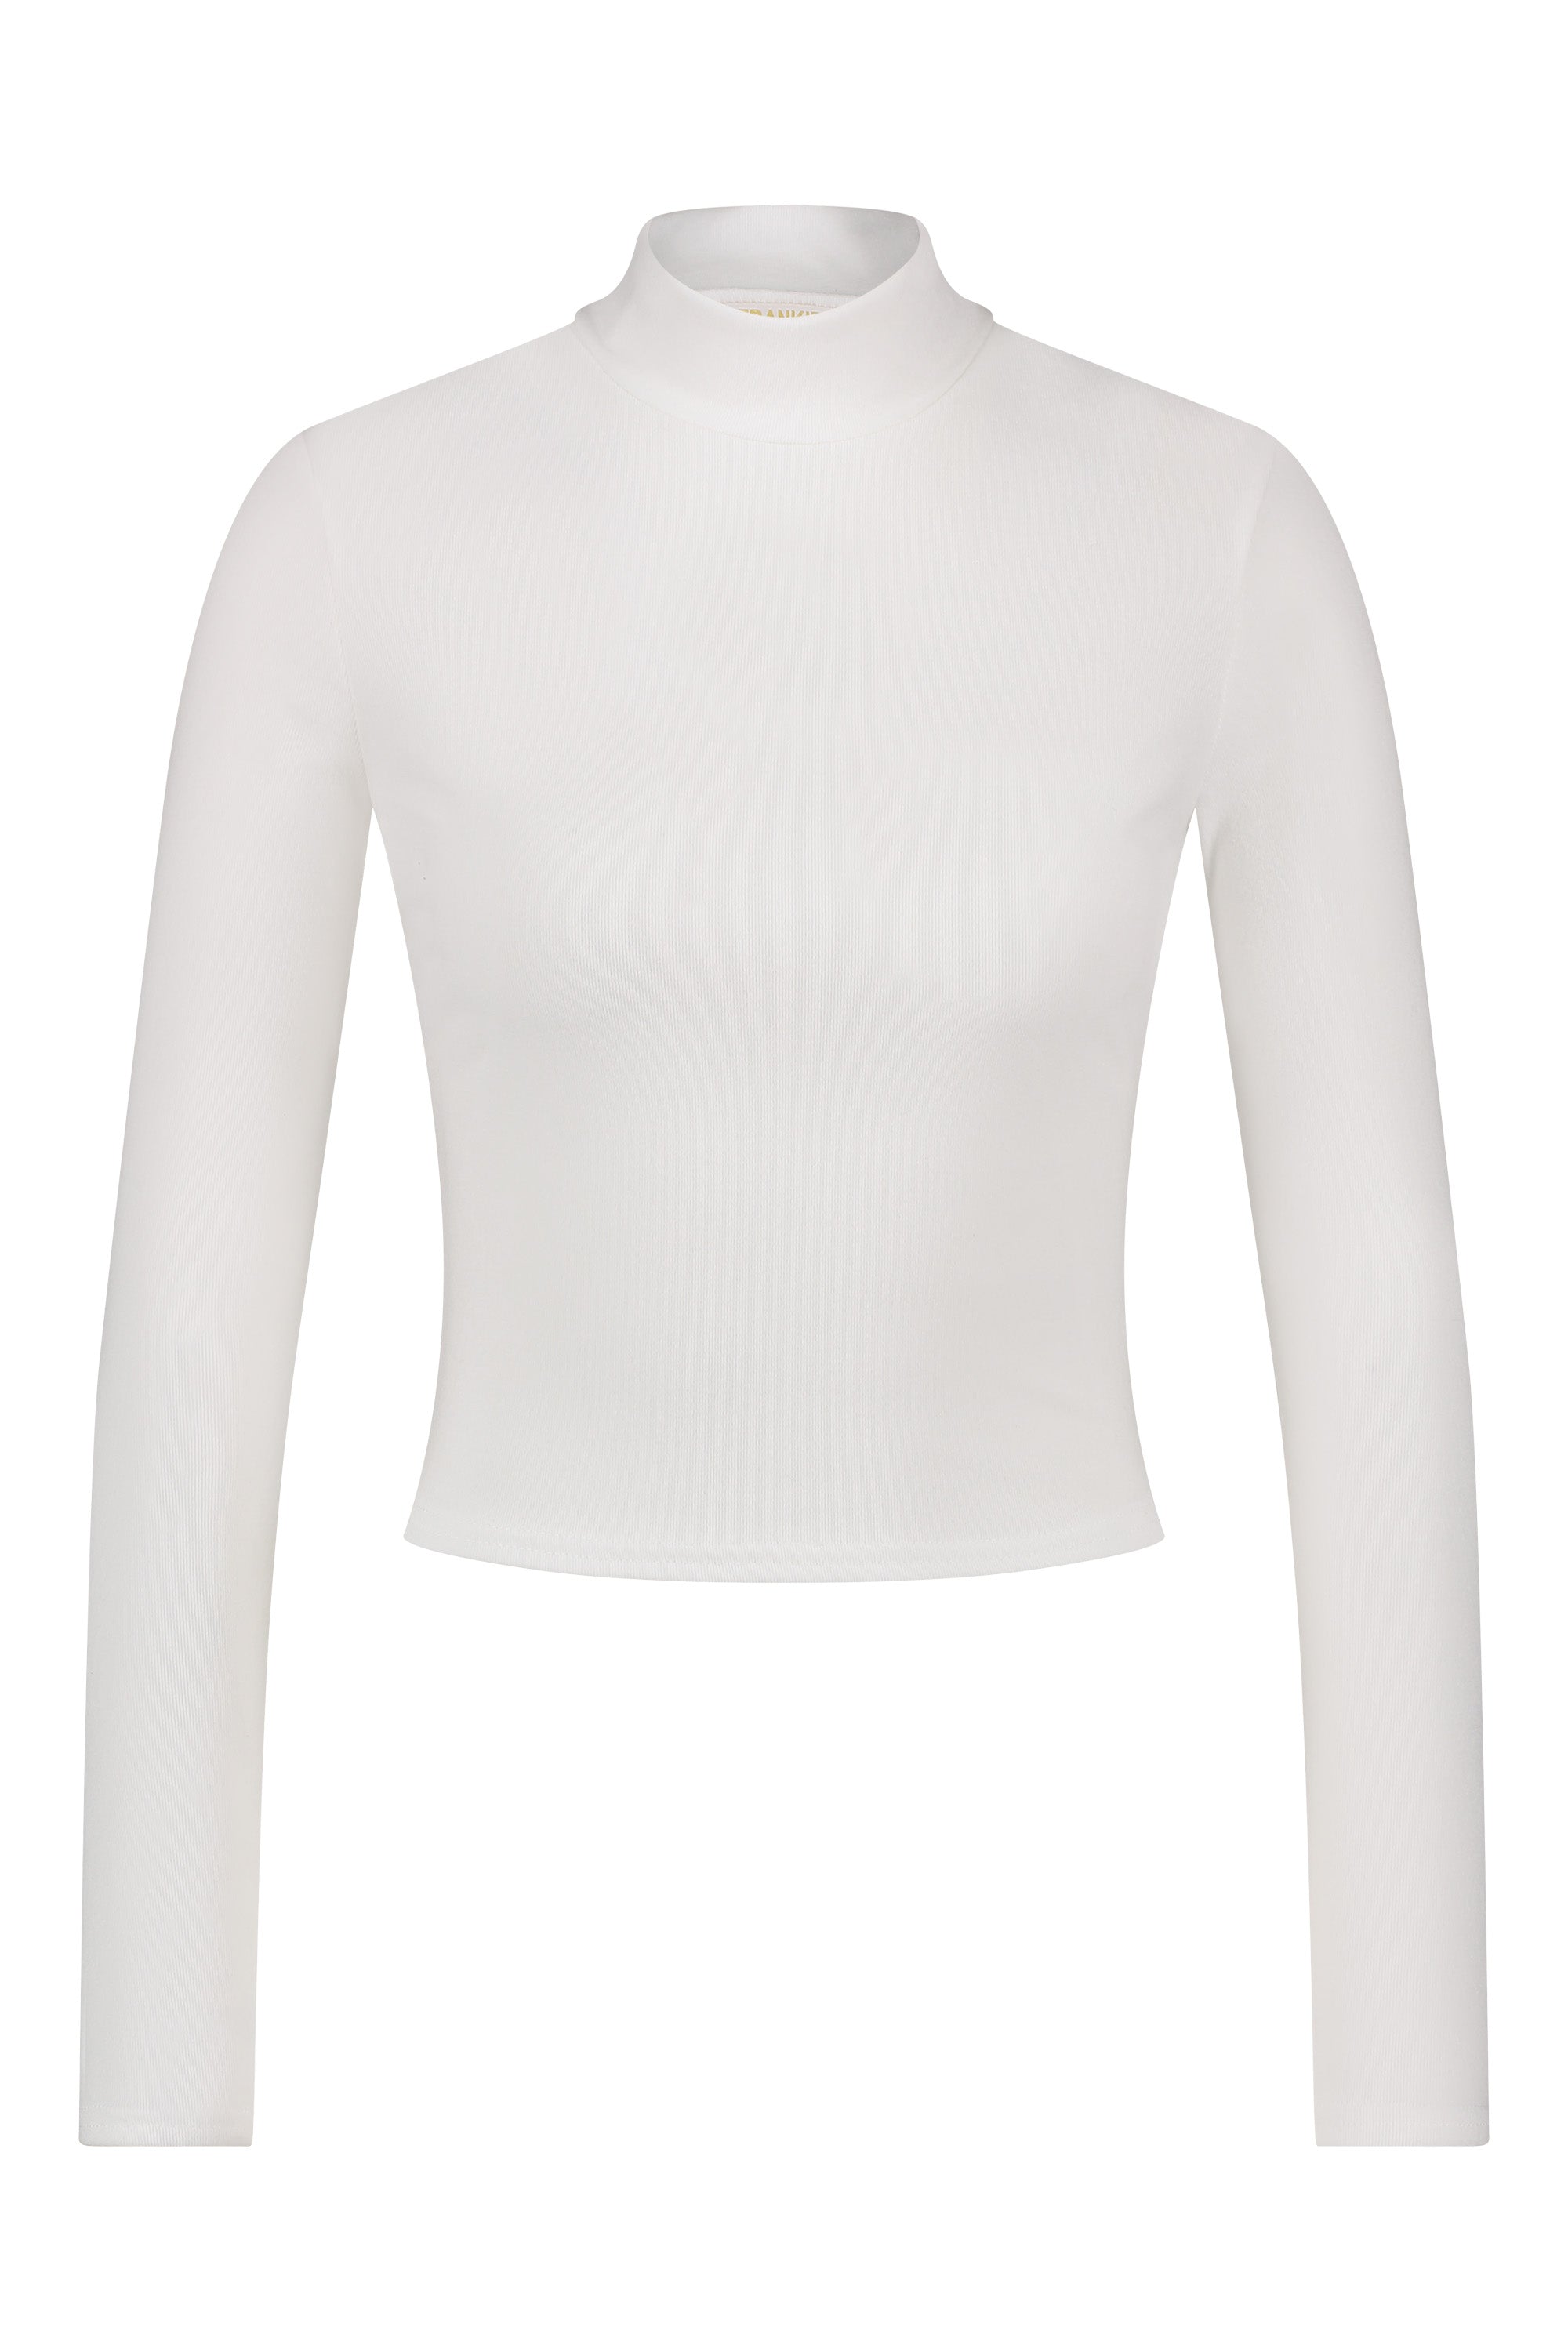 Basic top long sleeve soft white